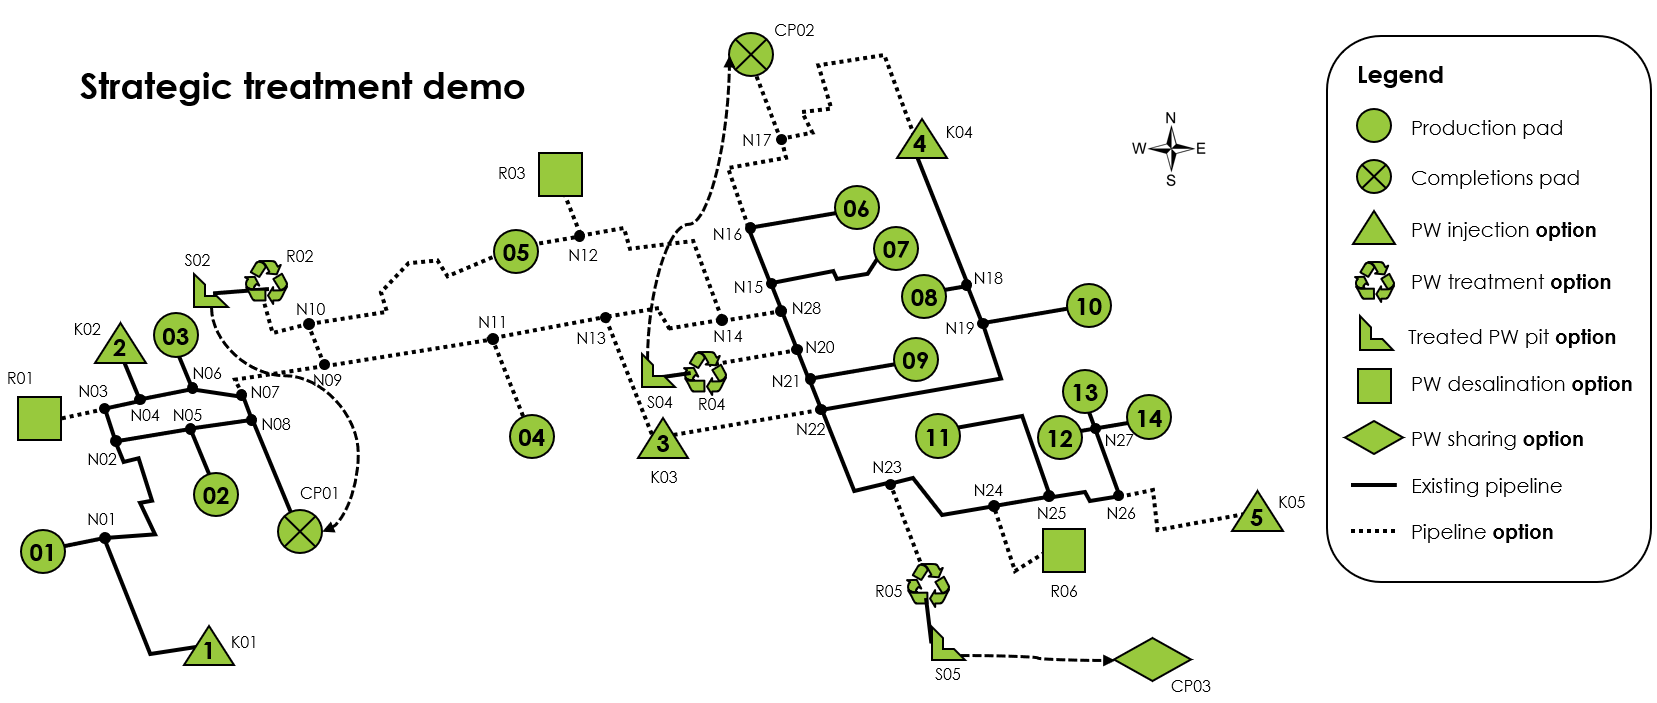 Strategic treatment demo network schematic